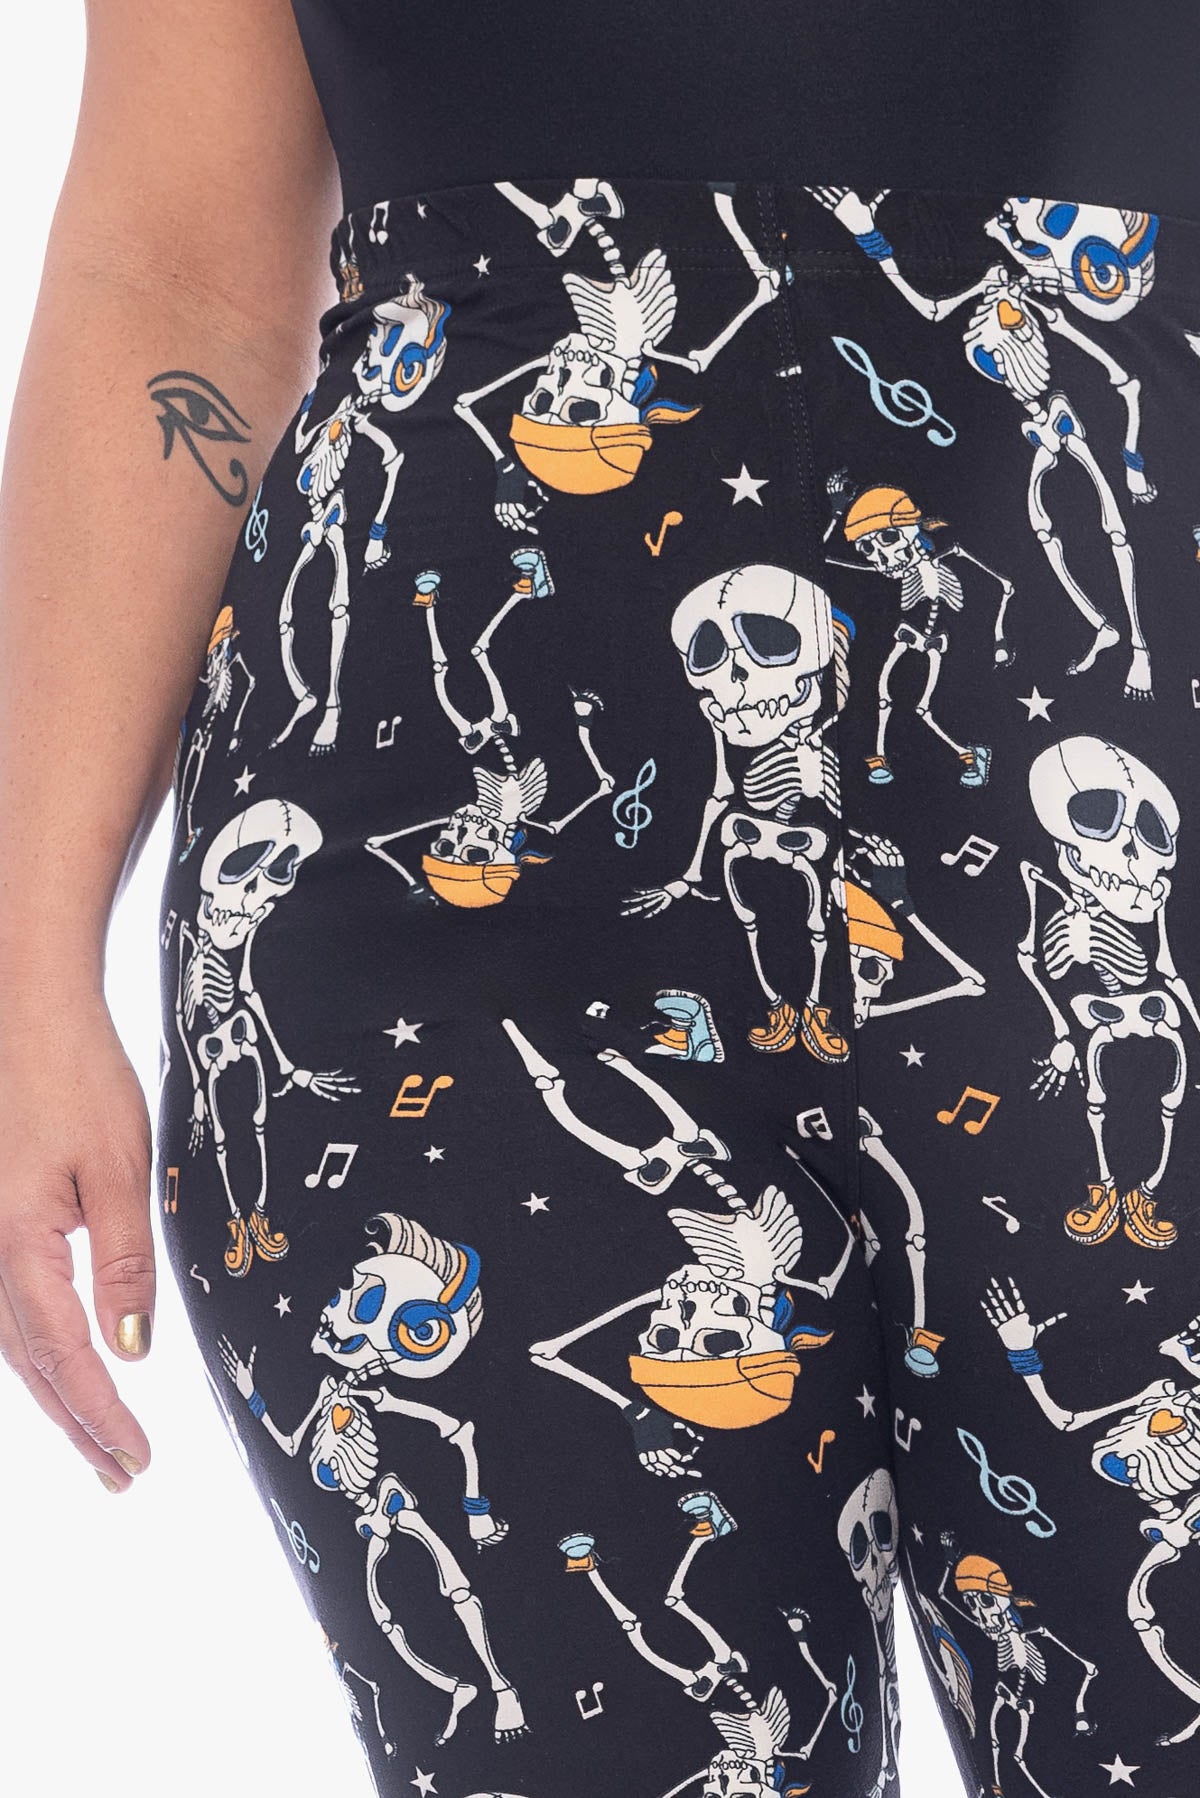 LILLY skeletons printed leggings